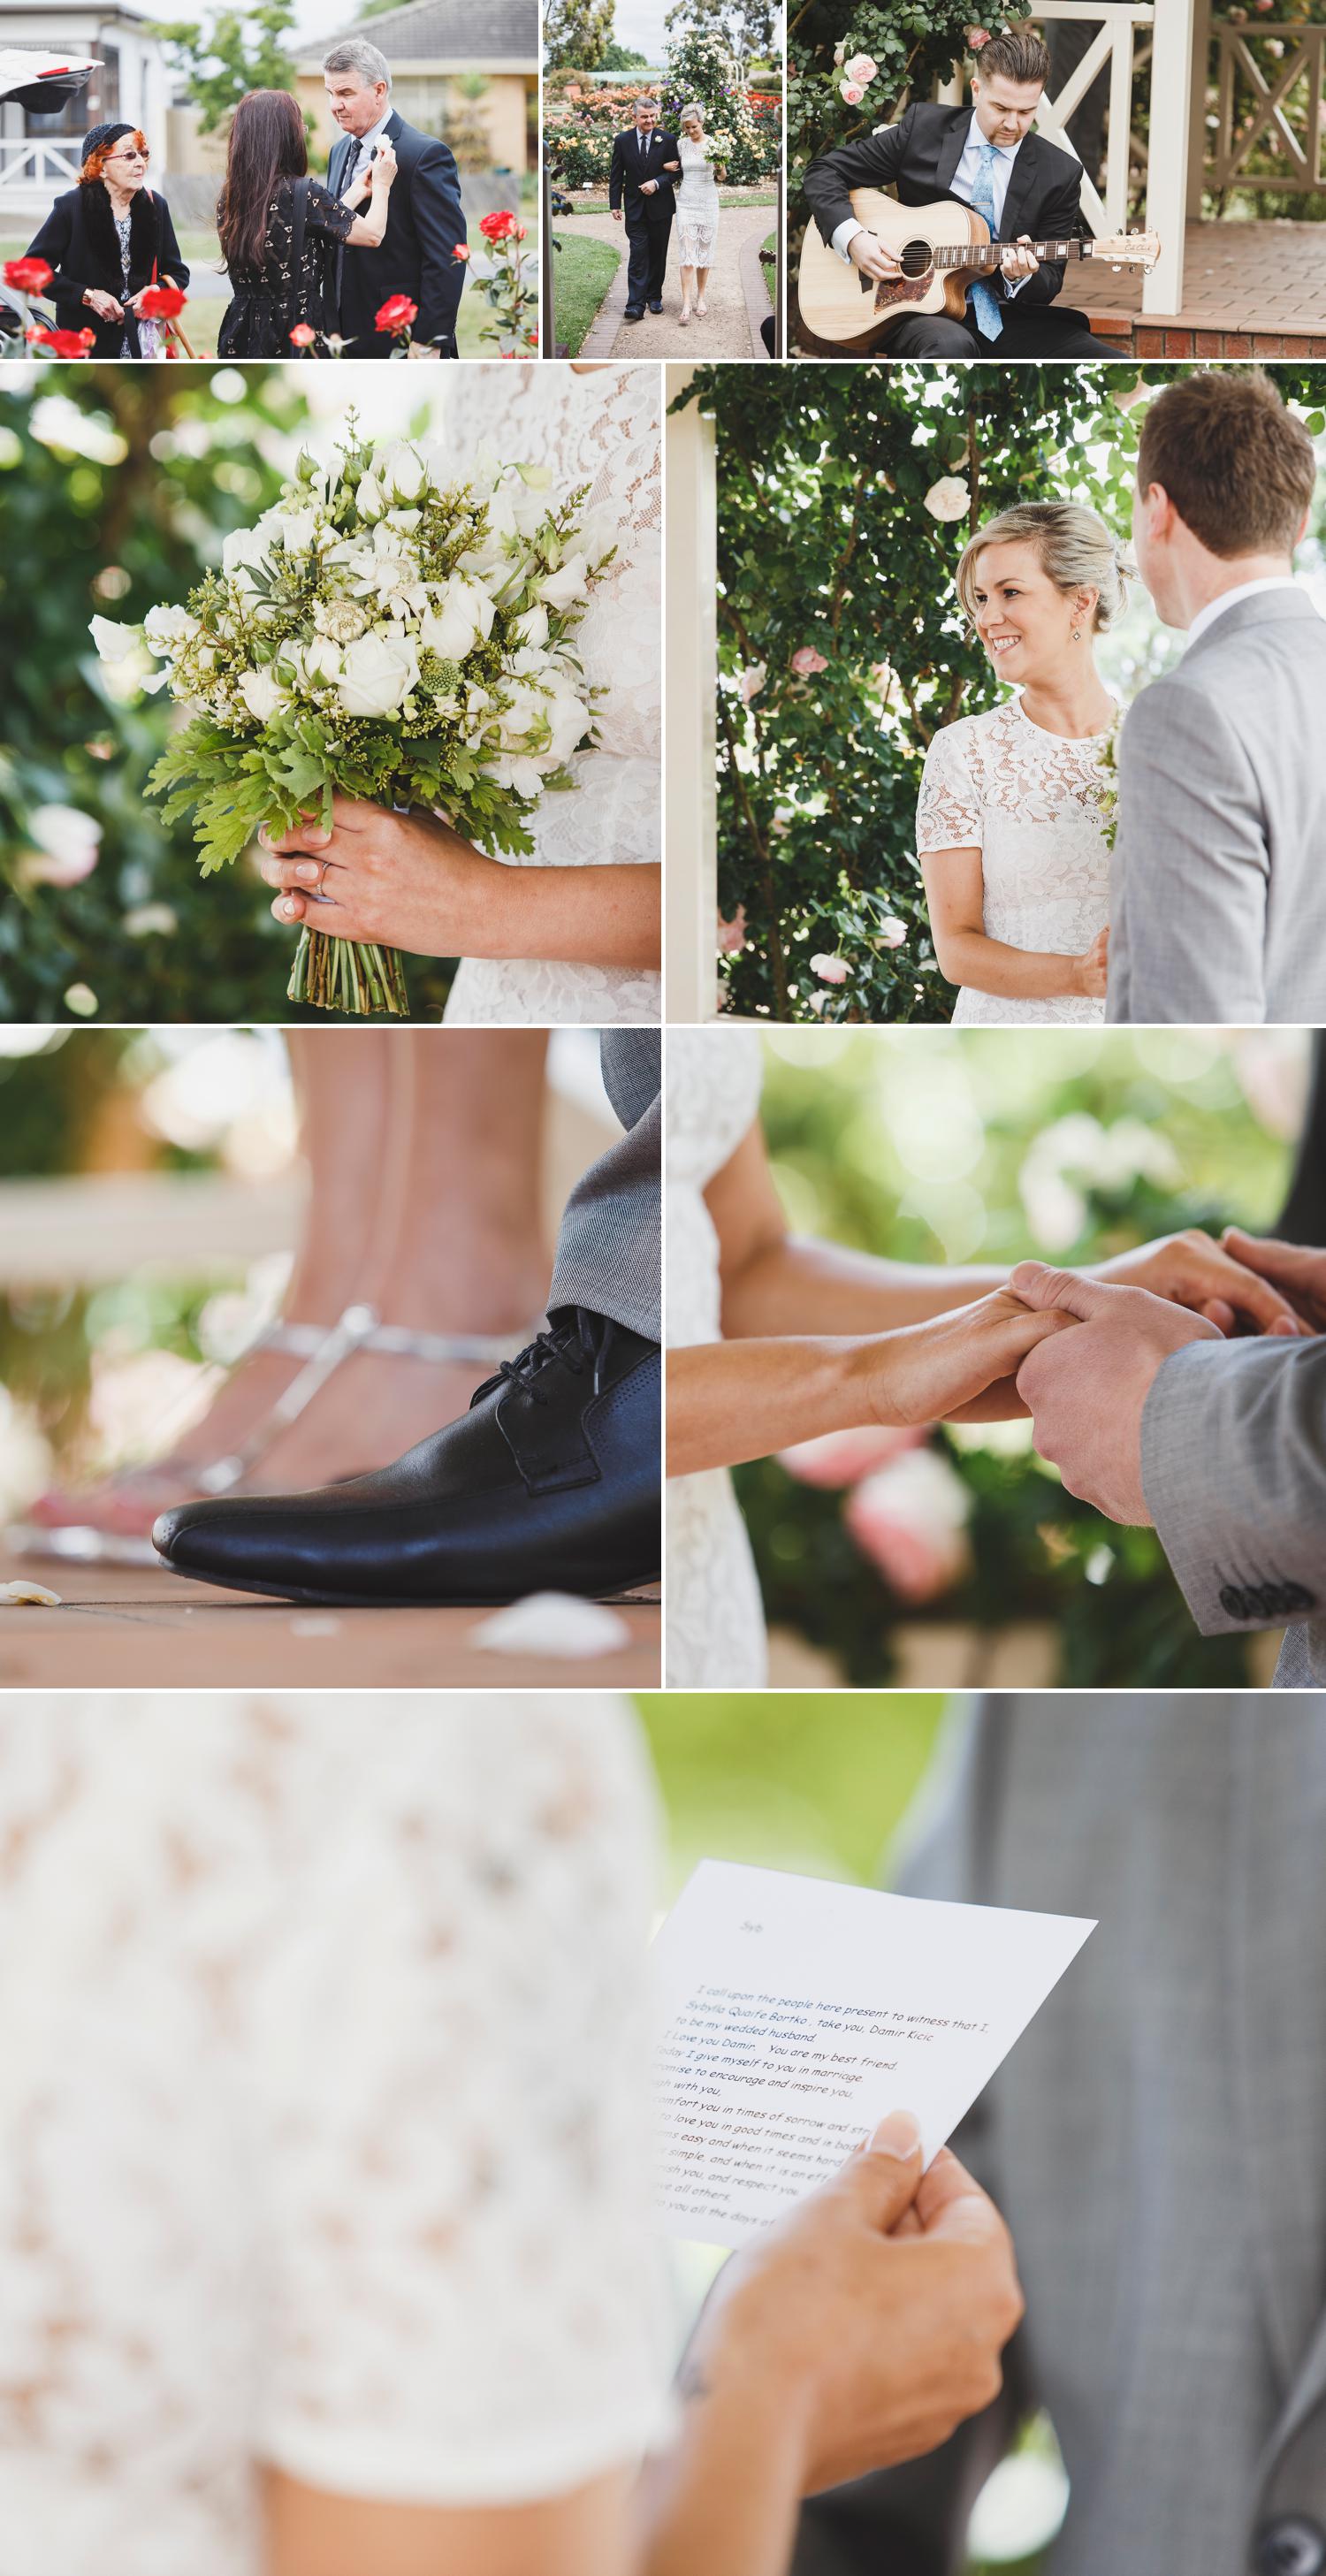 Beautiful Garden Wedding Morwell Gippsland, Bride and Groom Embracing, Wedding Flowers Photo by Danae Studios